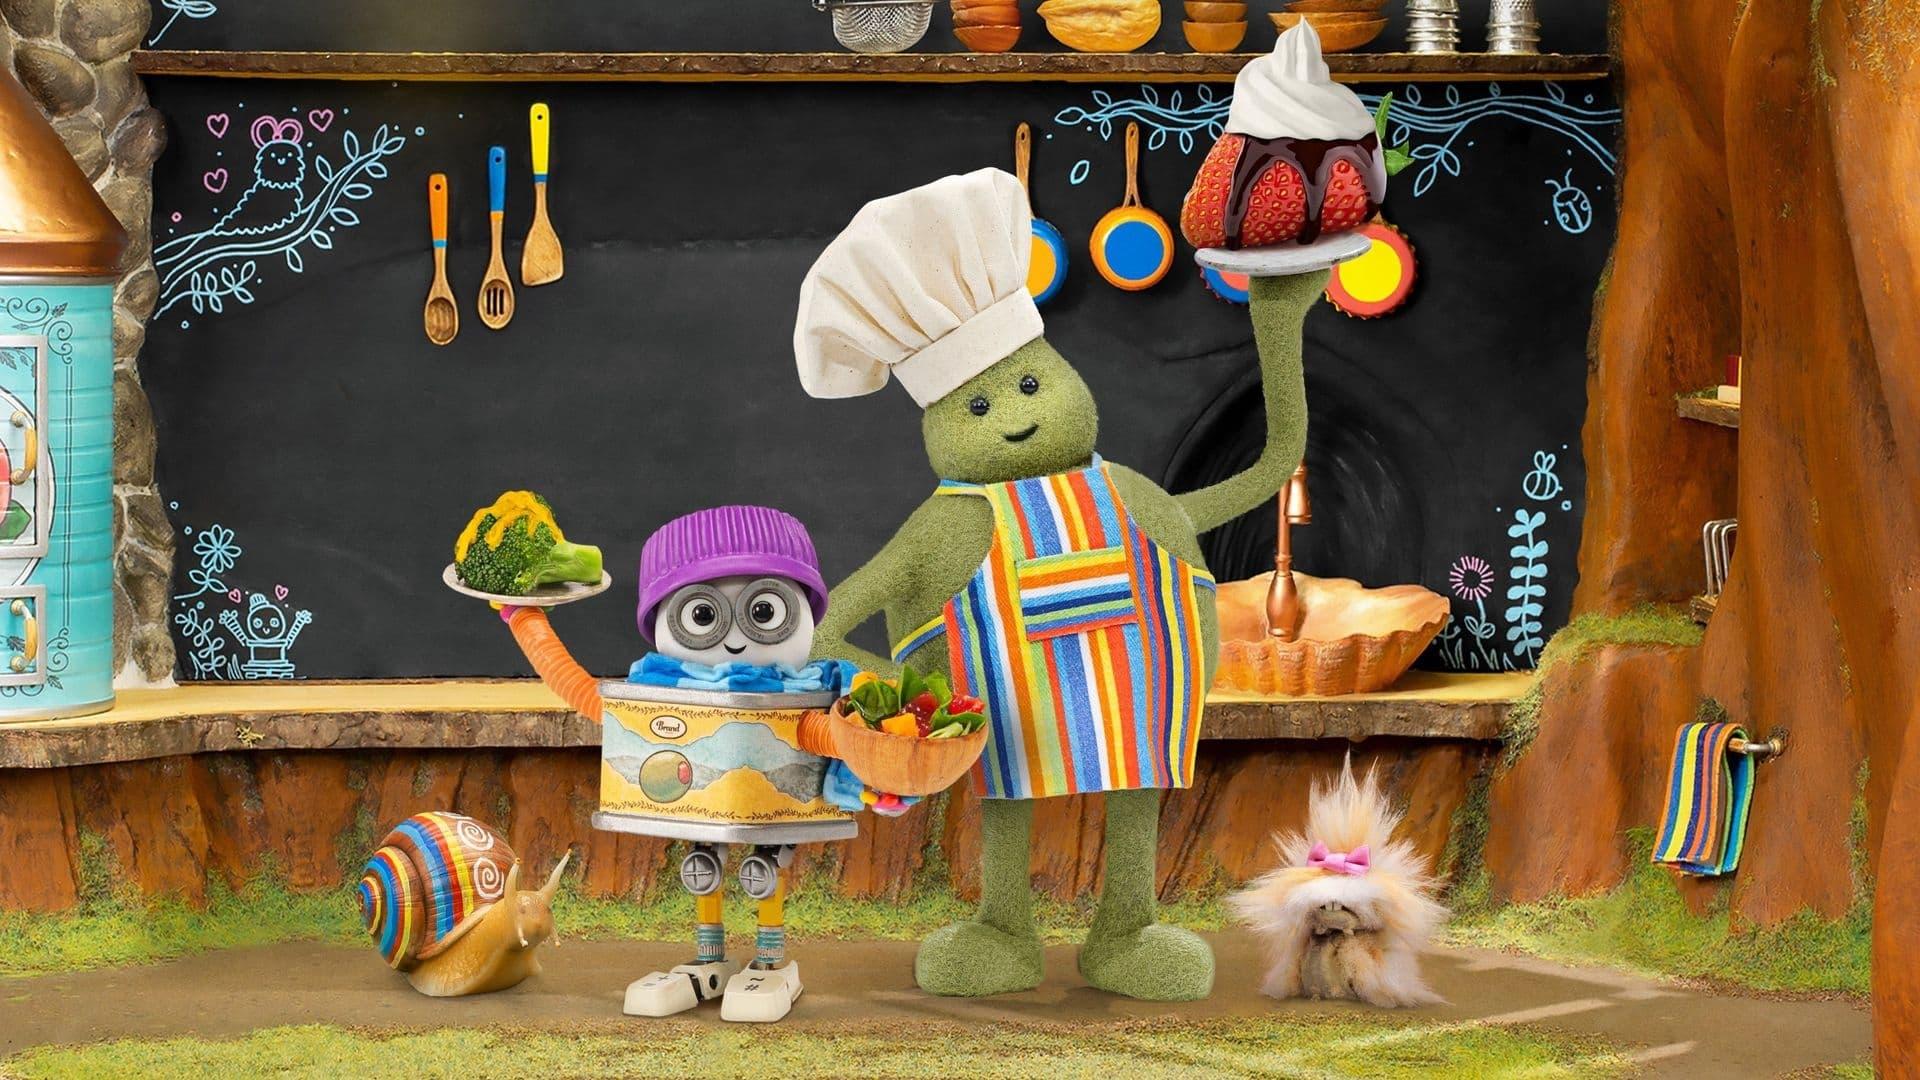 The Tiny Chef Show backdrop